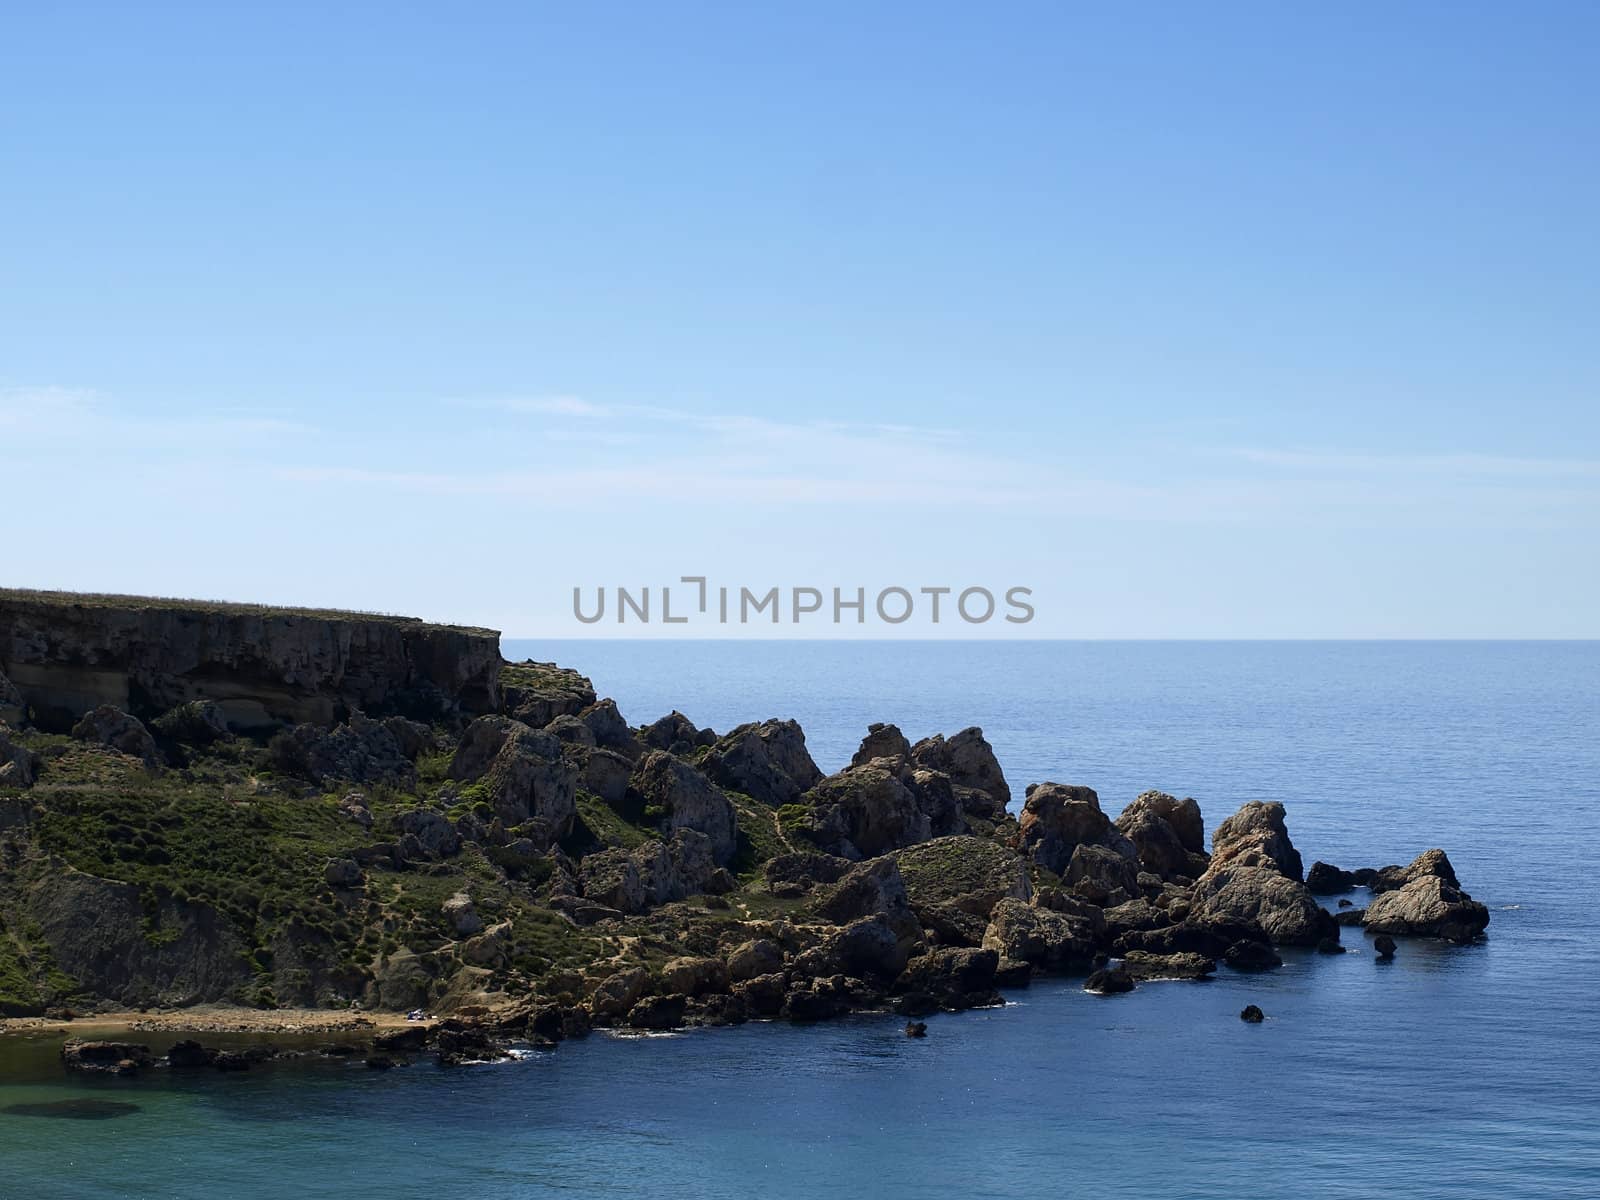 Rocks and boulders along the Mediterranean coastline in Malta